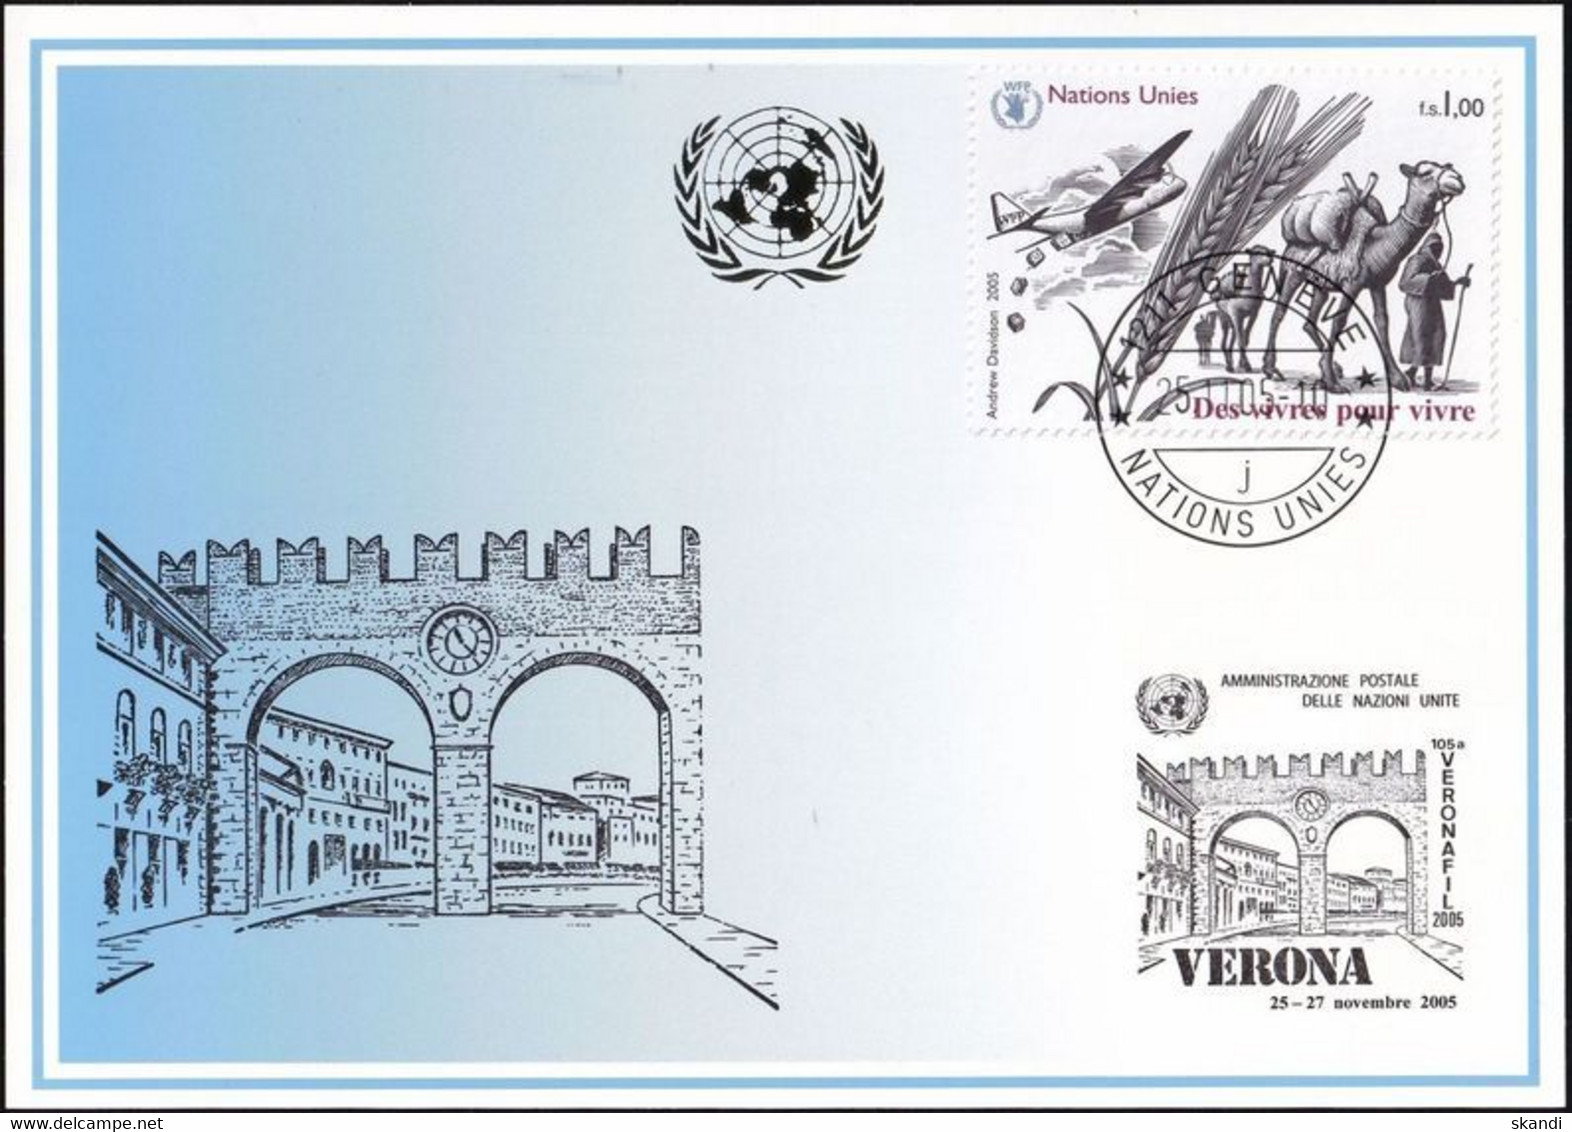 UNO GENF 2005 Mi-Nr. 356 Blaue Karte - Blue Card  Mit Erinnerungsstempel VERONA - Covers & Documents